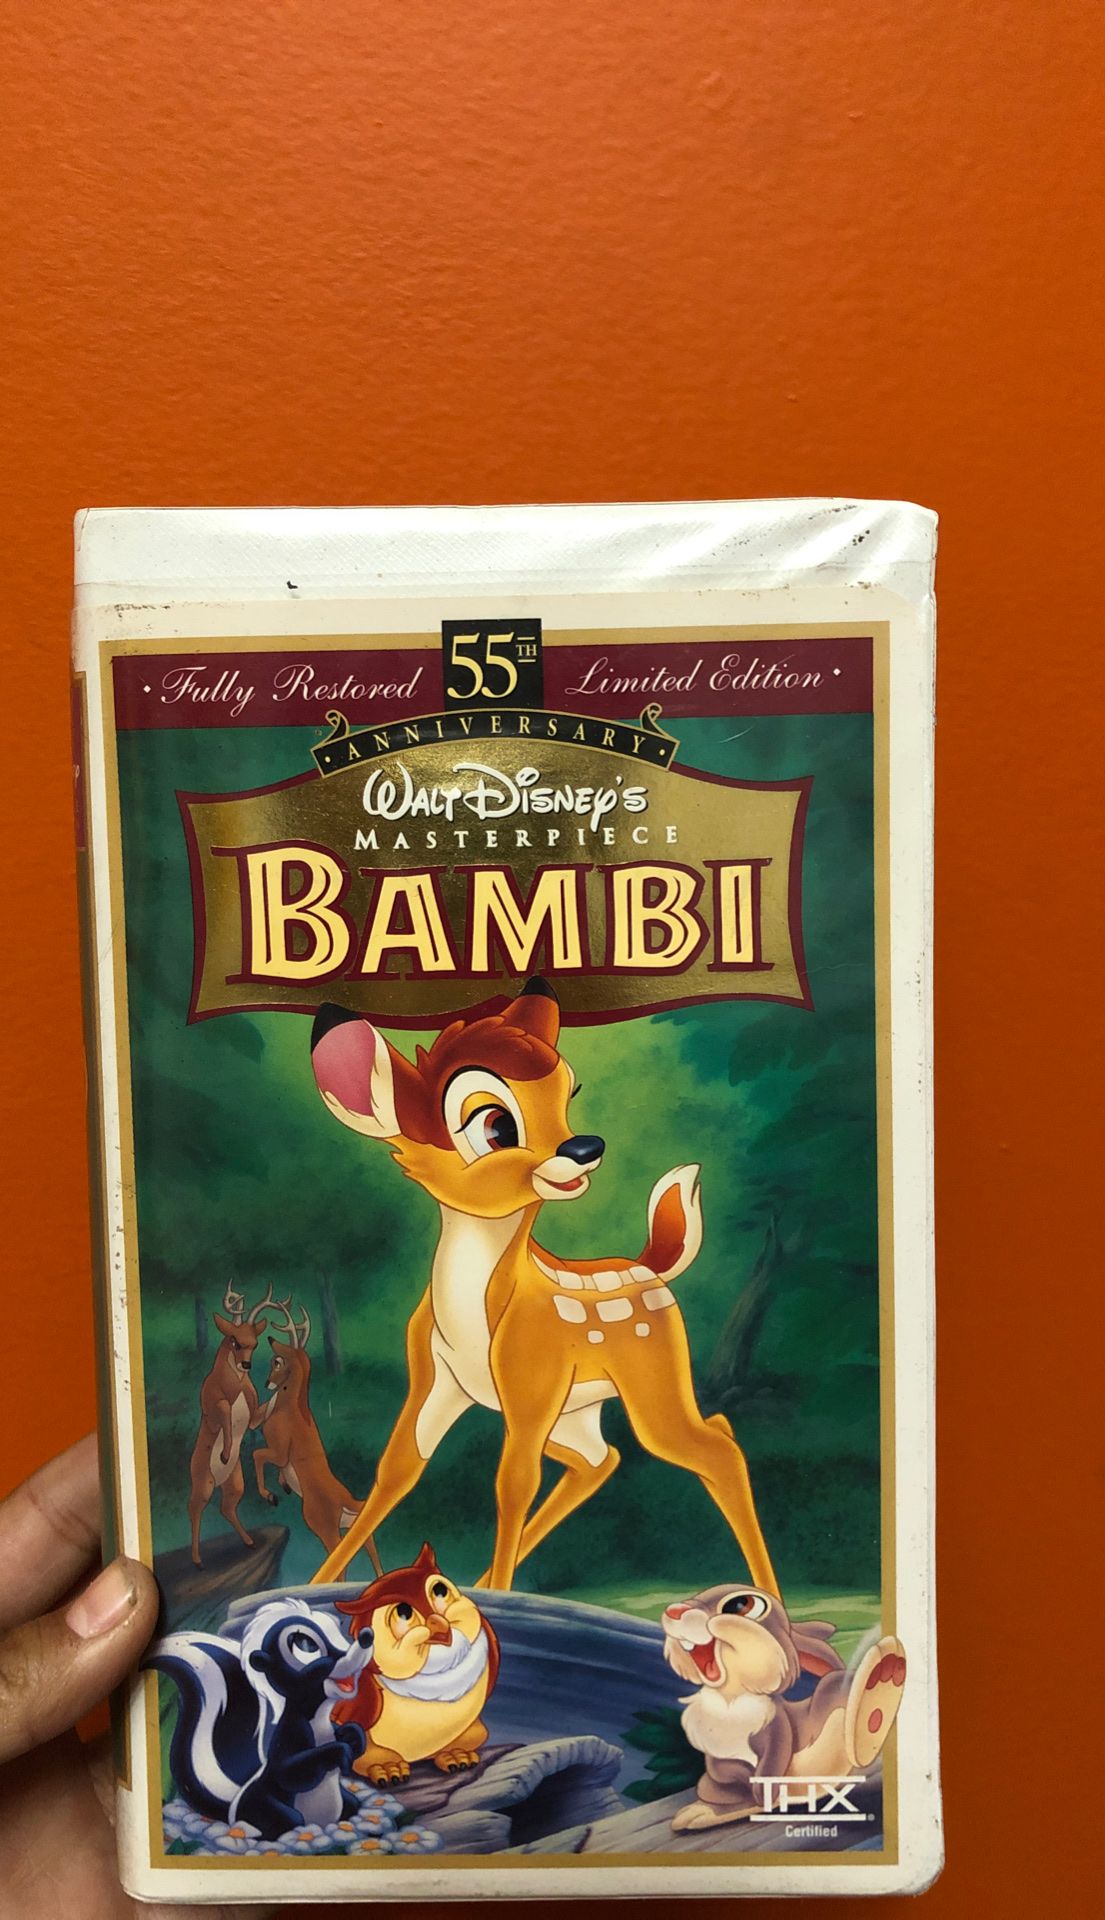 Walt Disney’s Masterpiece Bambi